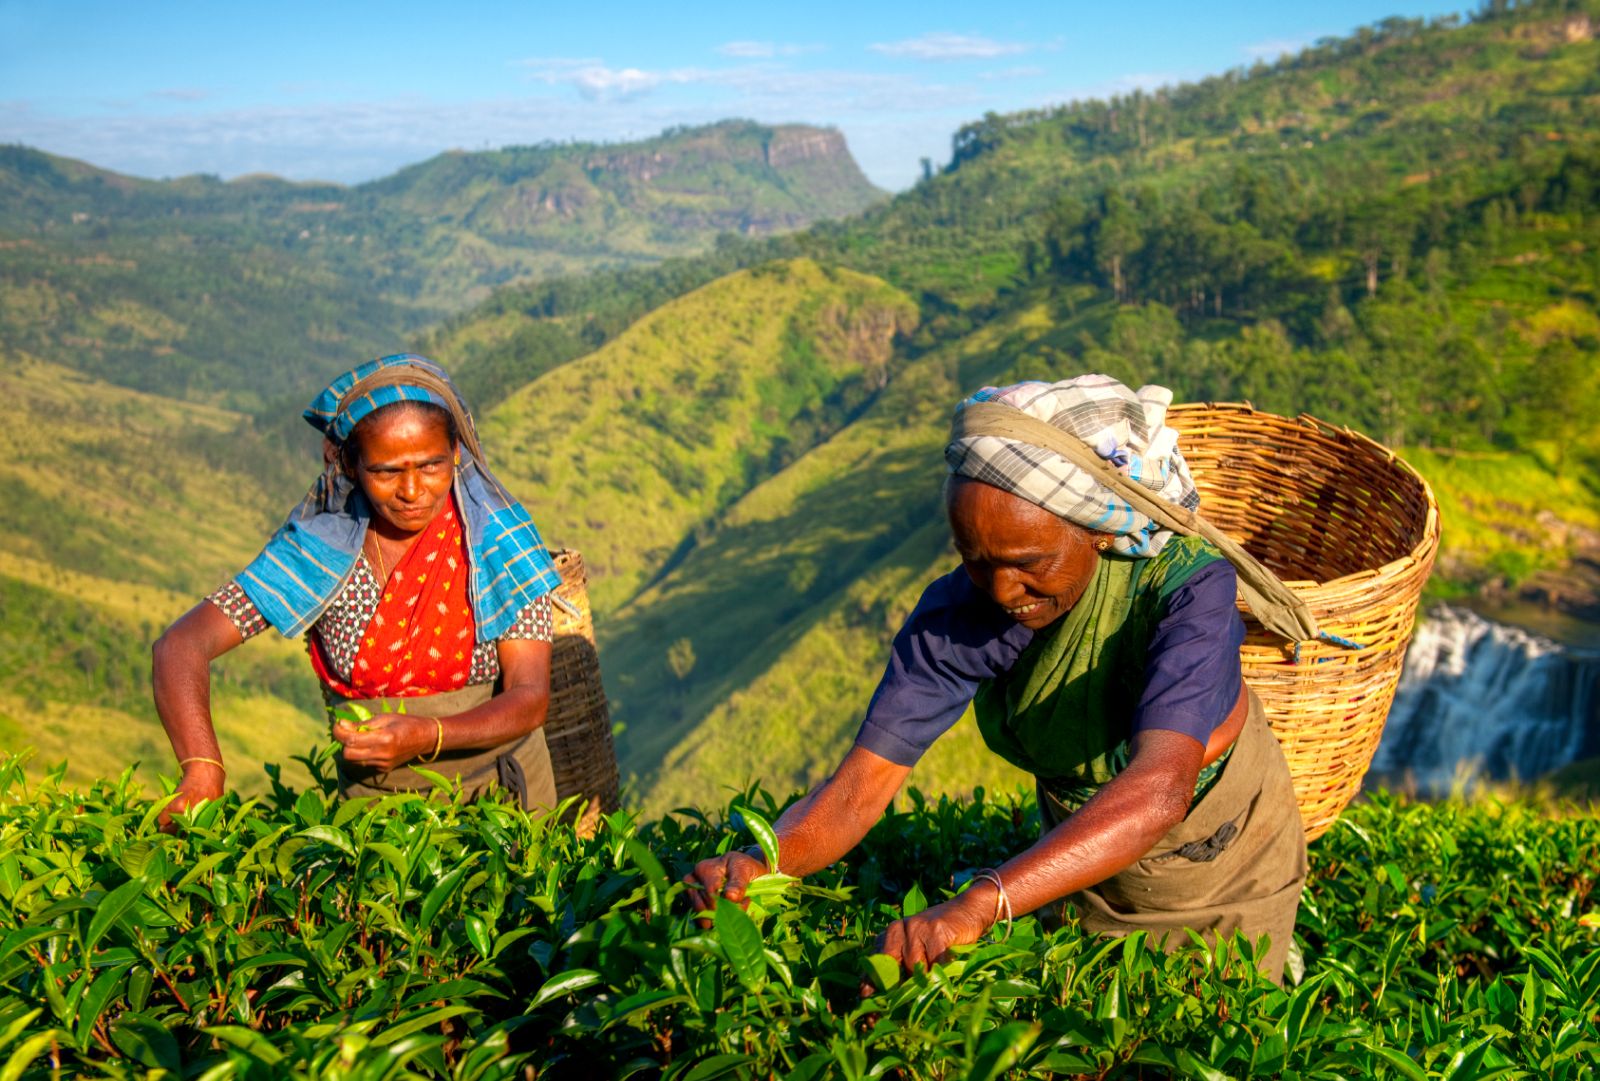 Tea pickers at work in Sri Lanka's Tea Country